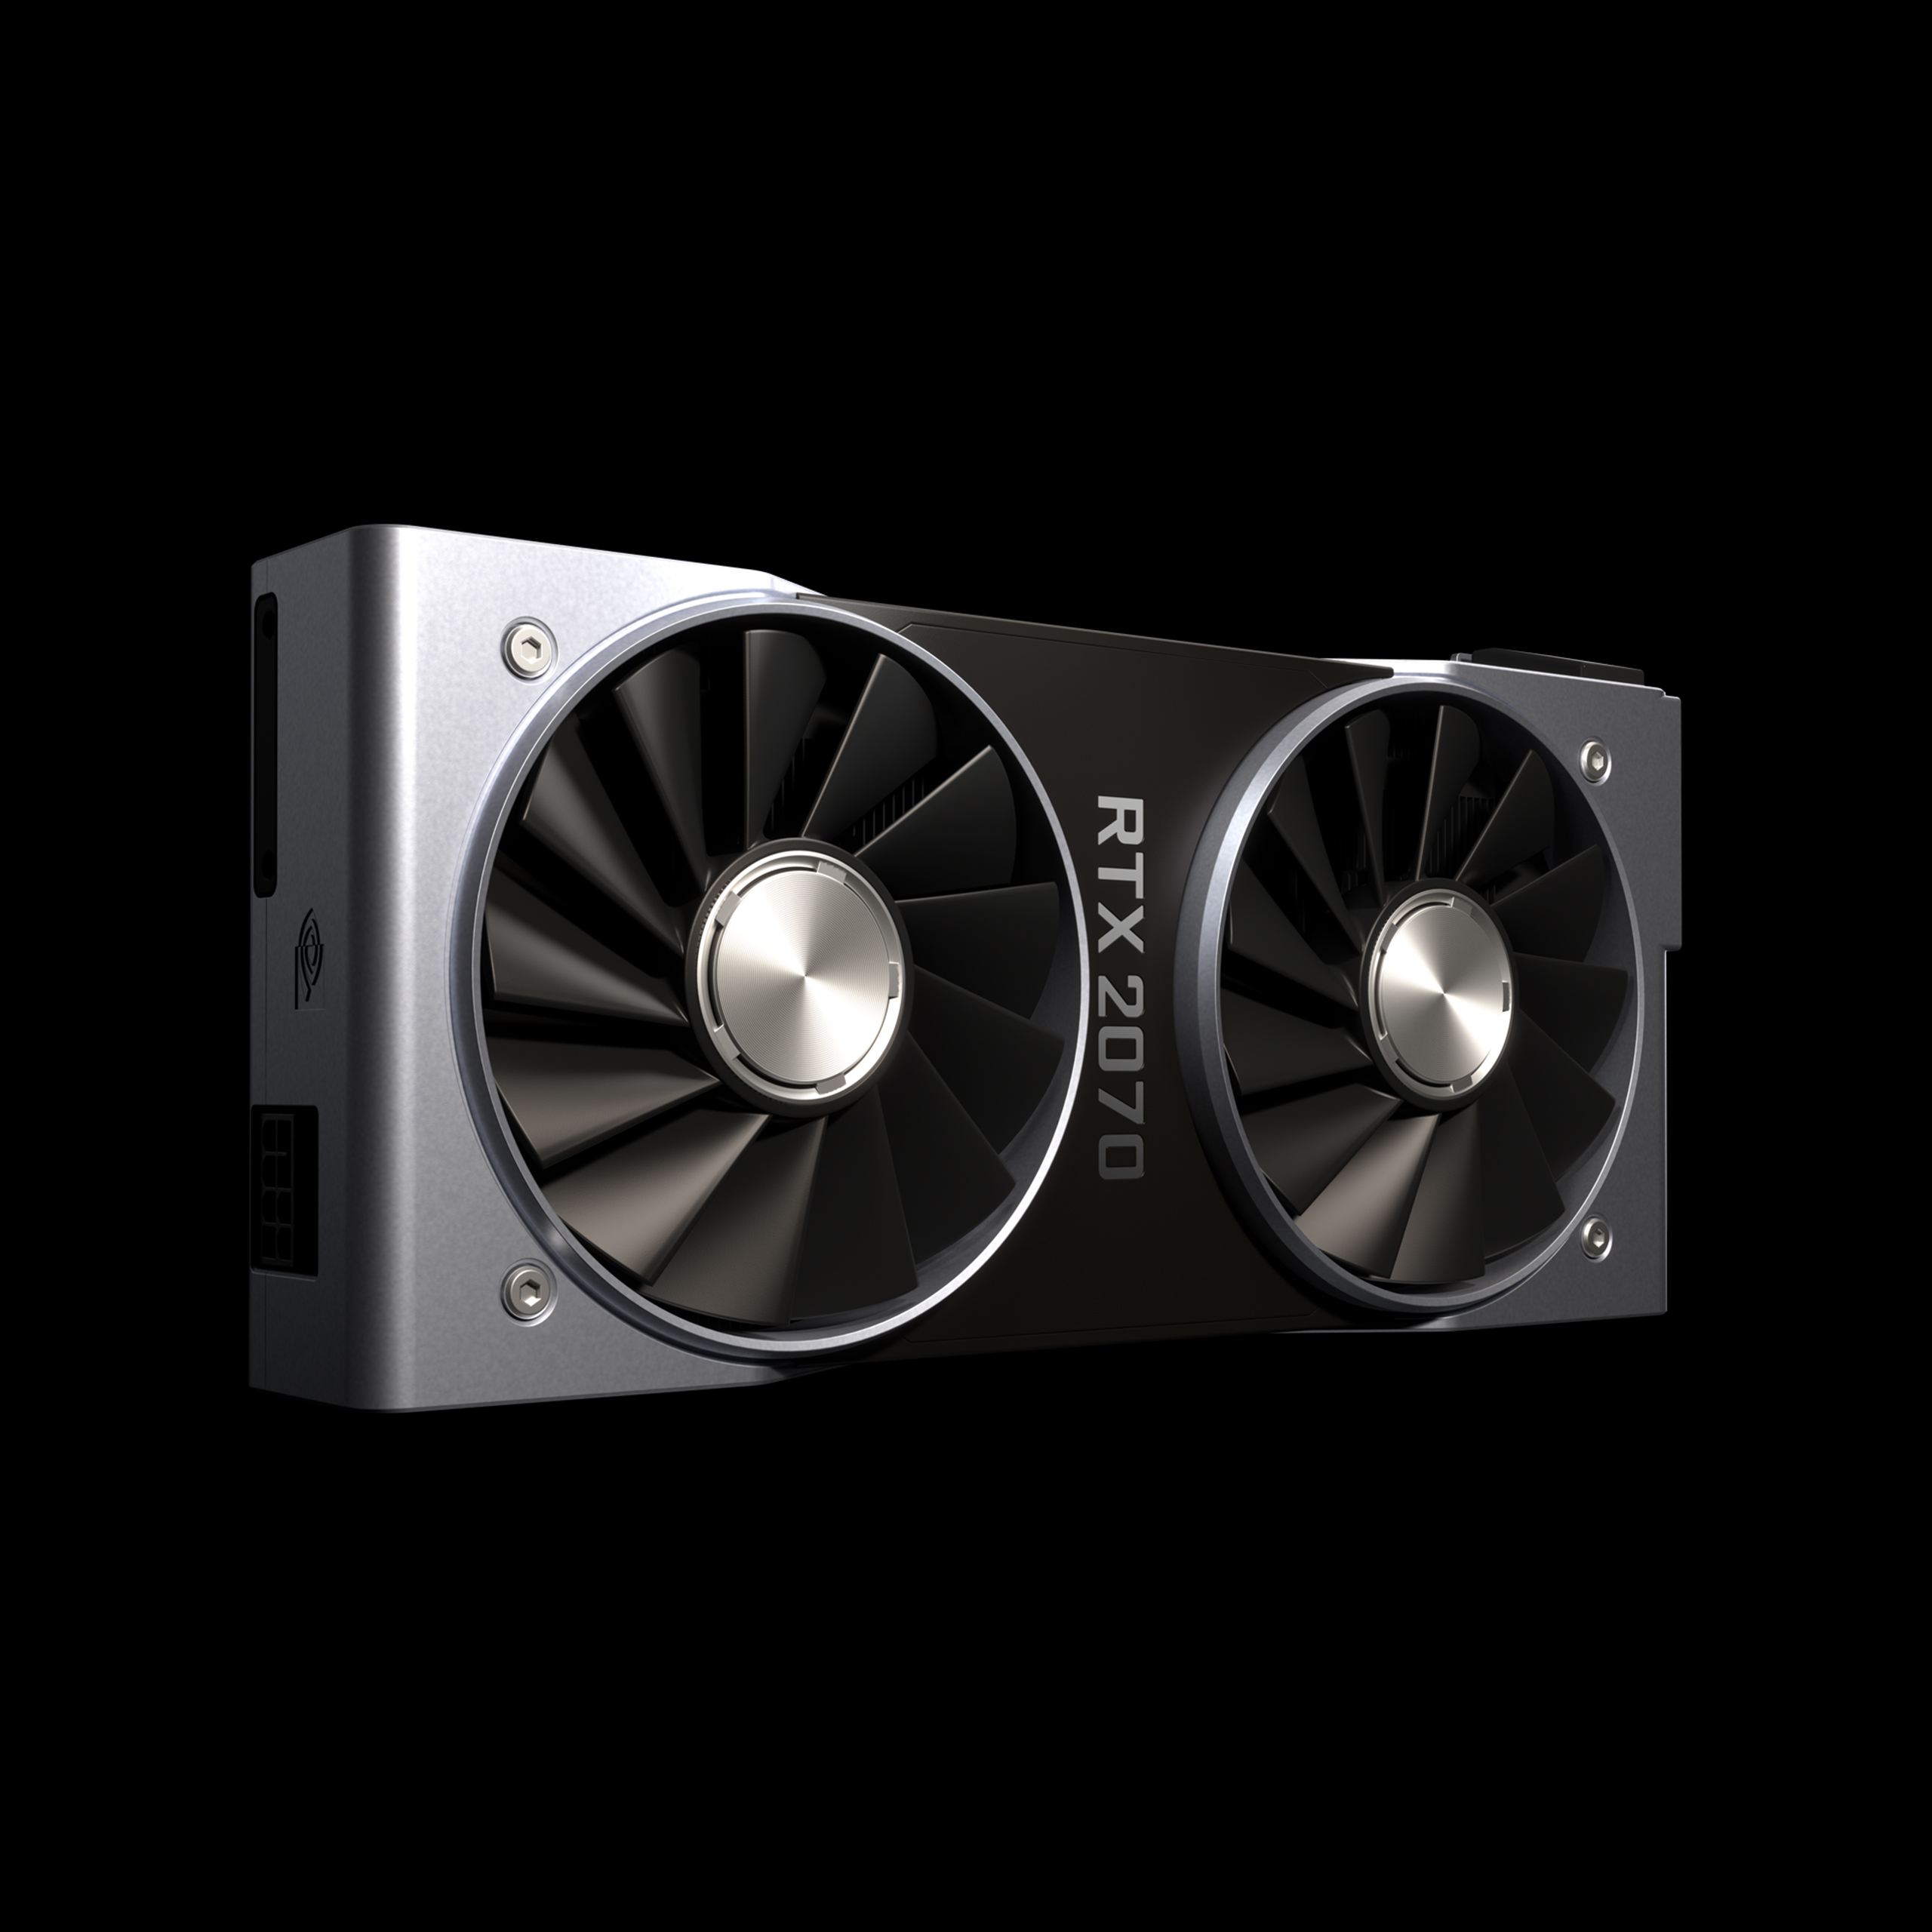 GeForce RTX 2070 光线追踪游戏显卡| NVIDIA